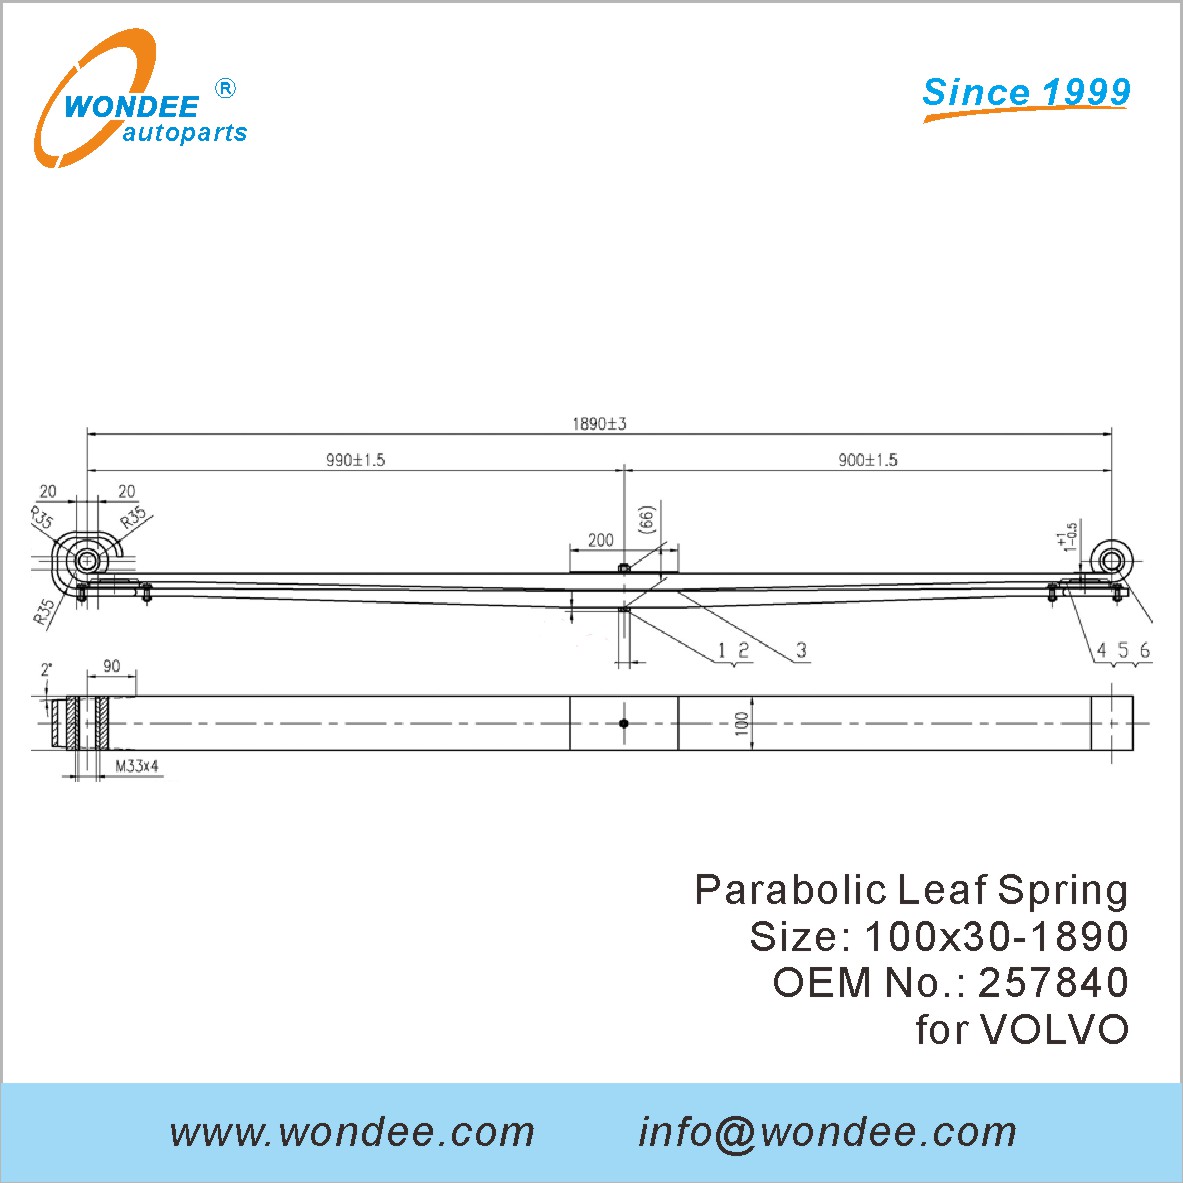 WONDEE light duty parabolic Leaf Spring OEM 257840 for VOLVO